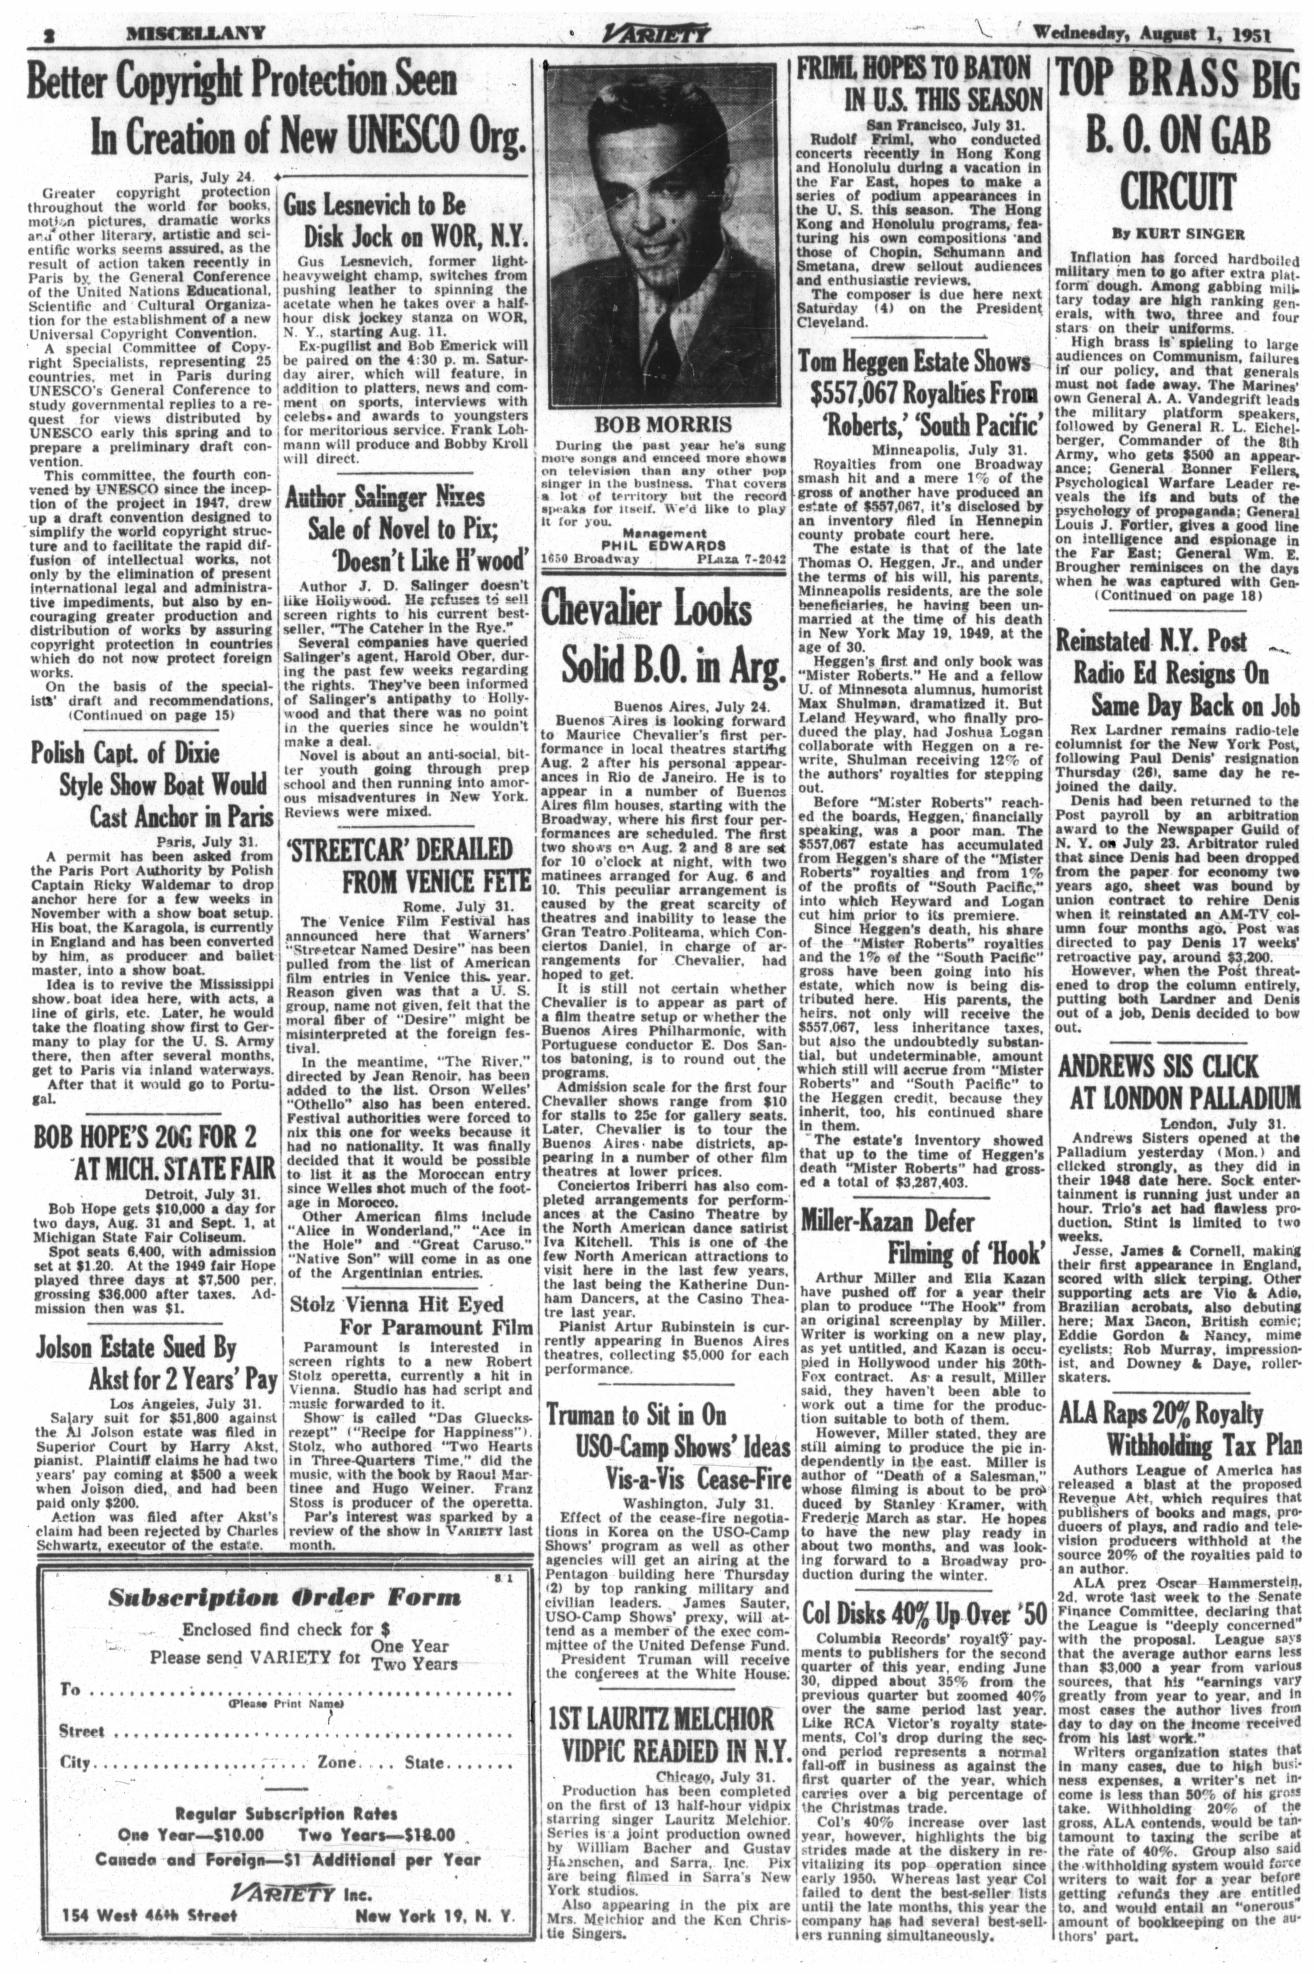 Variety (August 01, 1951)